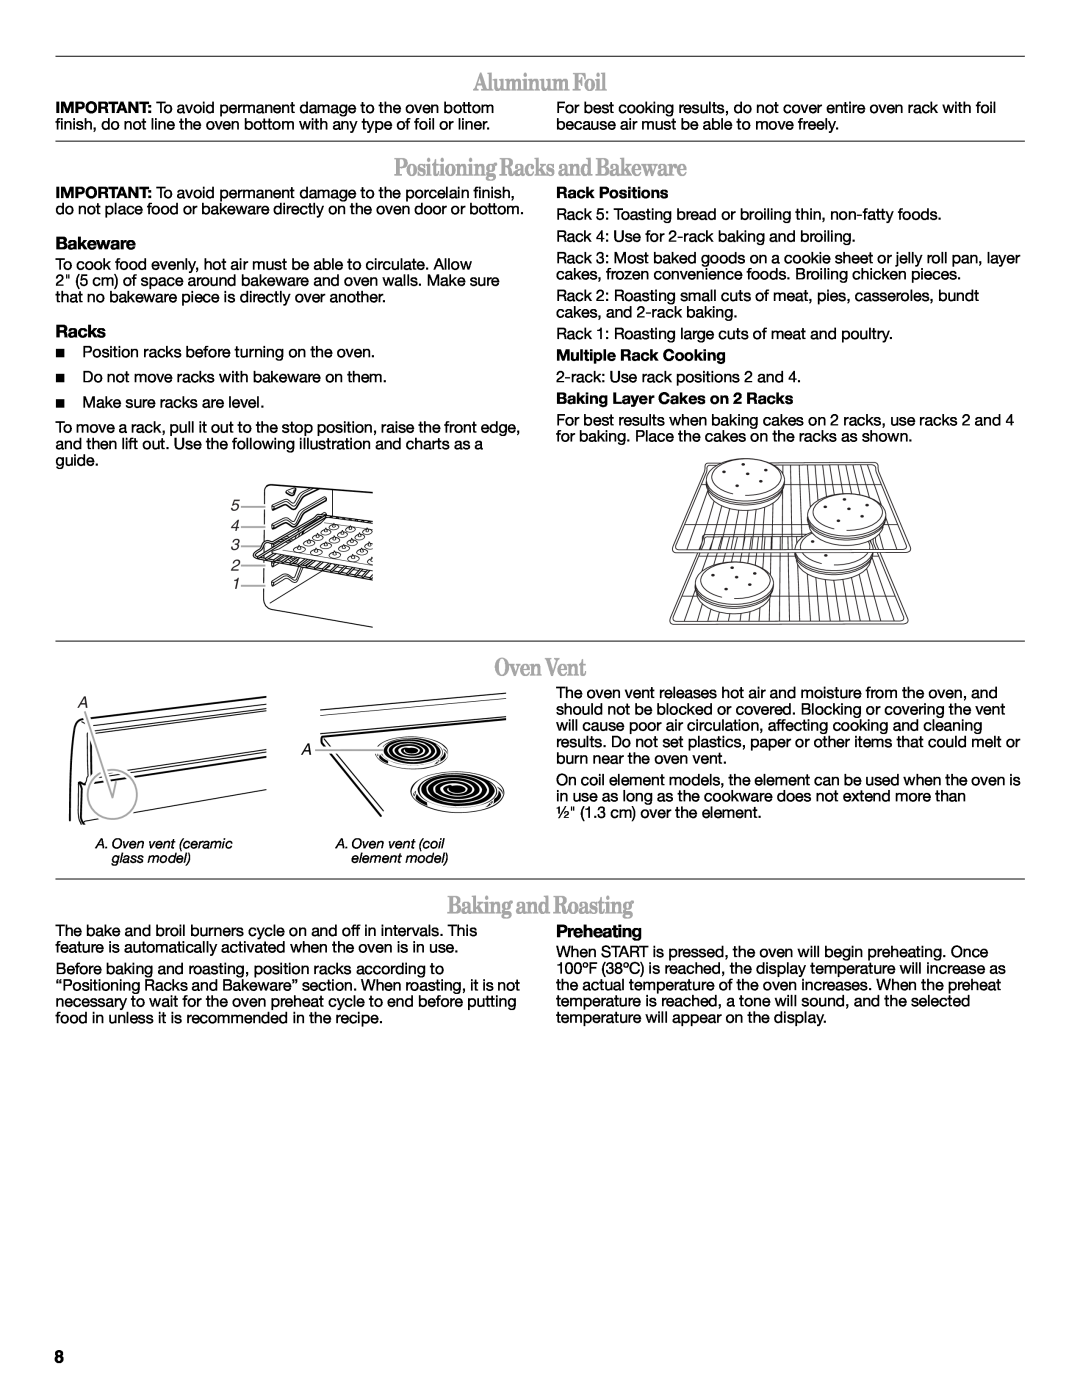 Amana W10419394A warranty AluminumFoil, PositioningRacksandBakeware, Oven Vent, BakingandRoasting, Preheating 